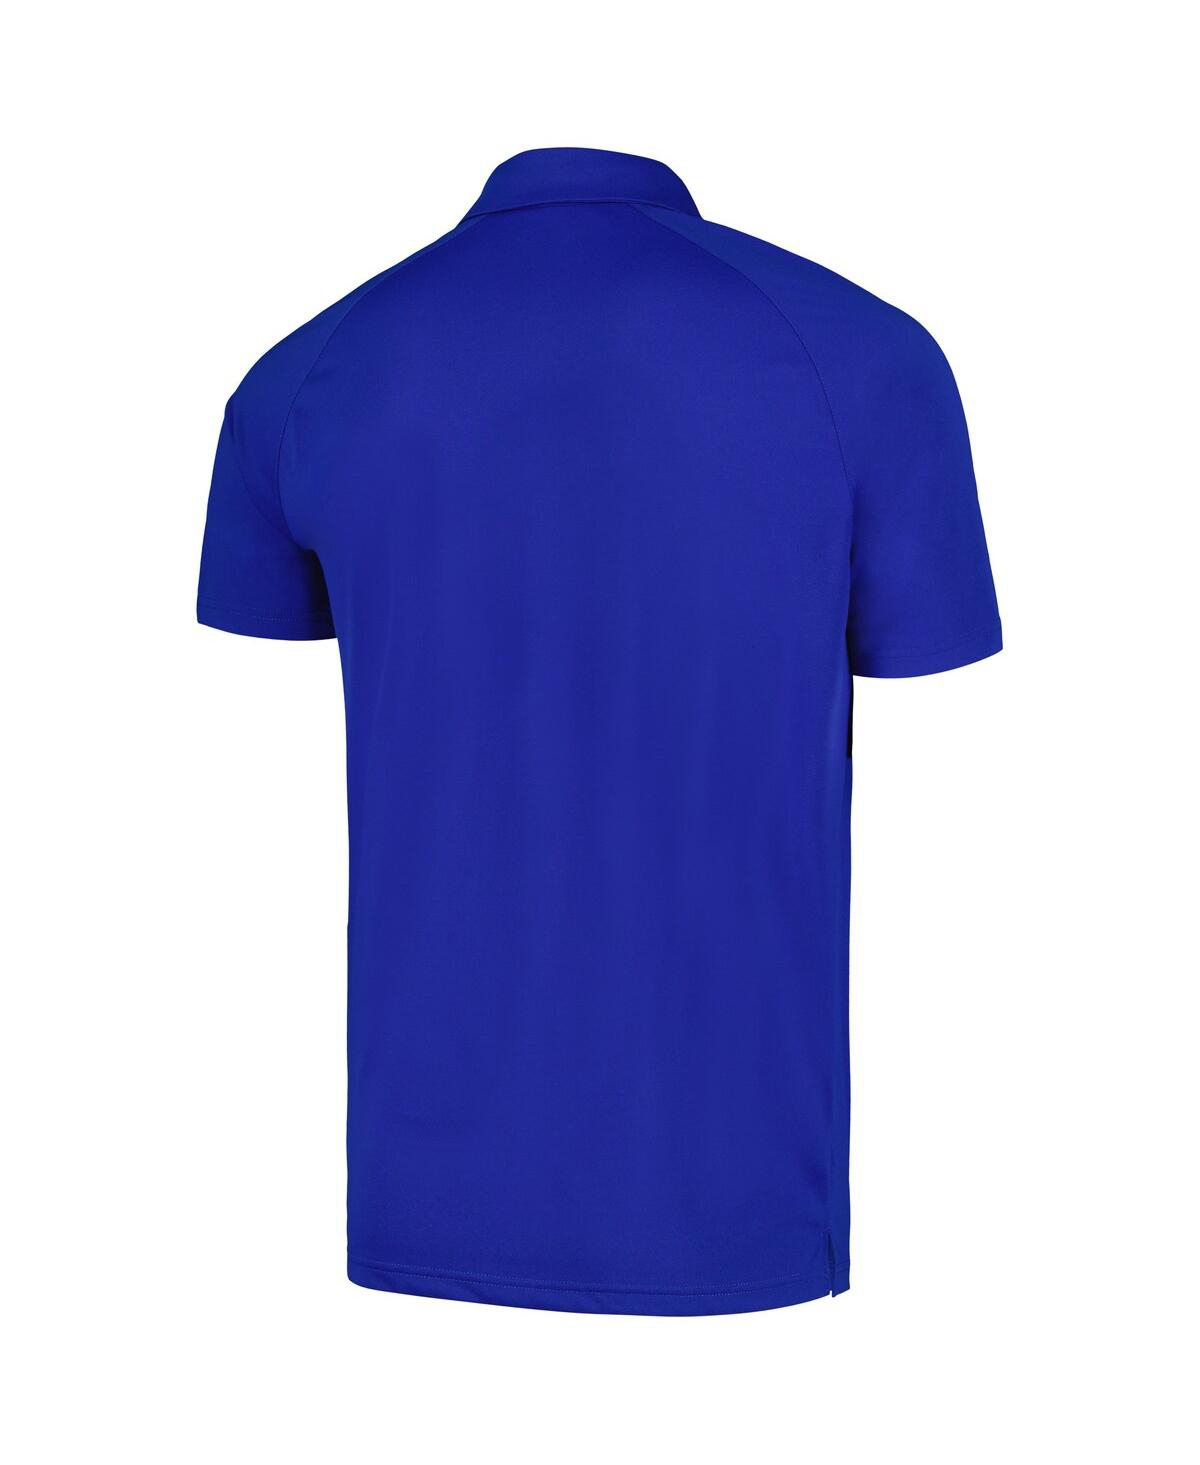 Shop Levelwear Men's  Royal New York Mets Sector Batter Up Raglan Polo Shirt